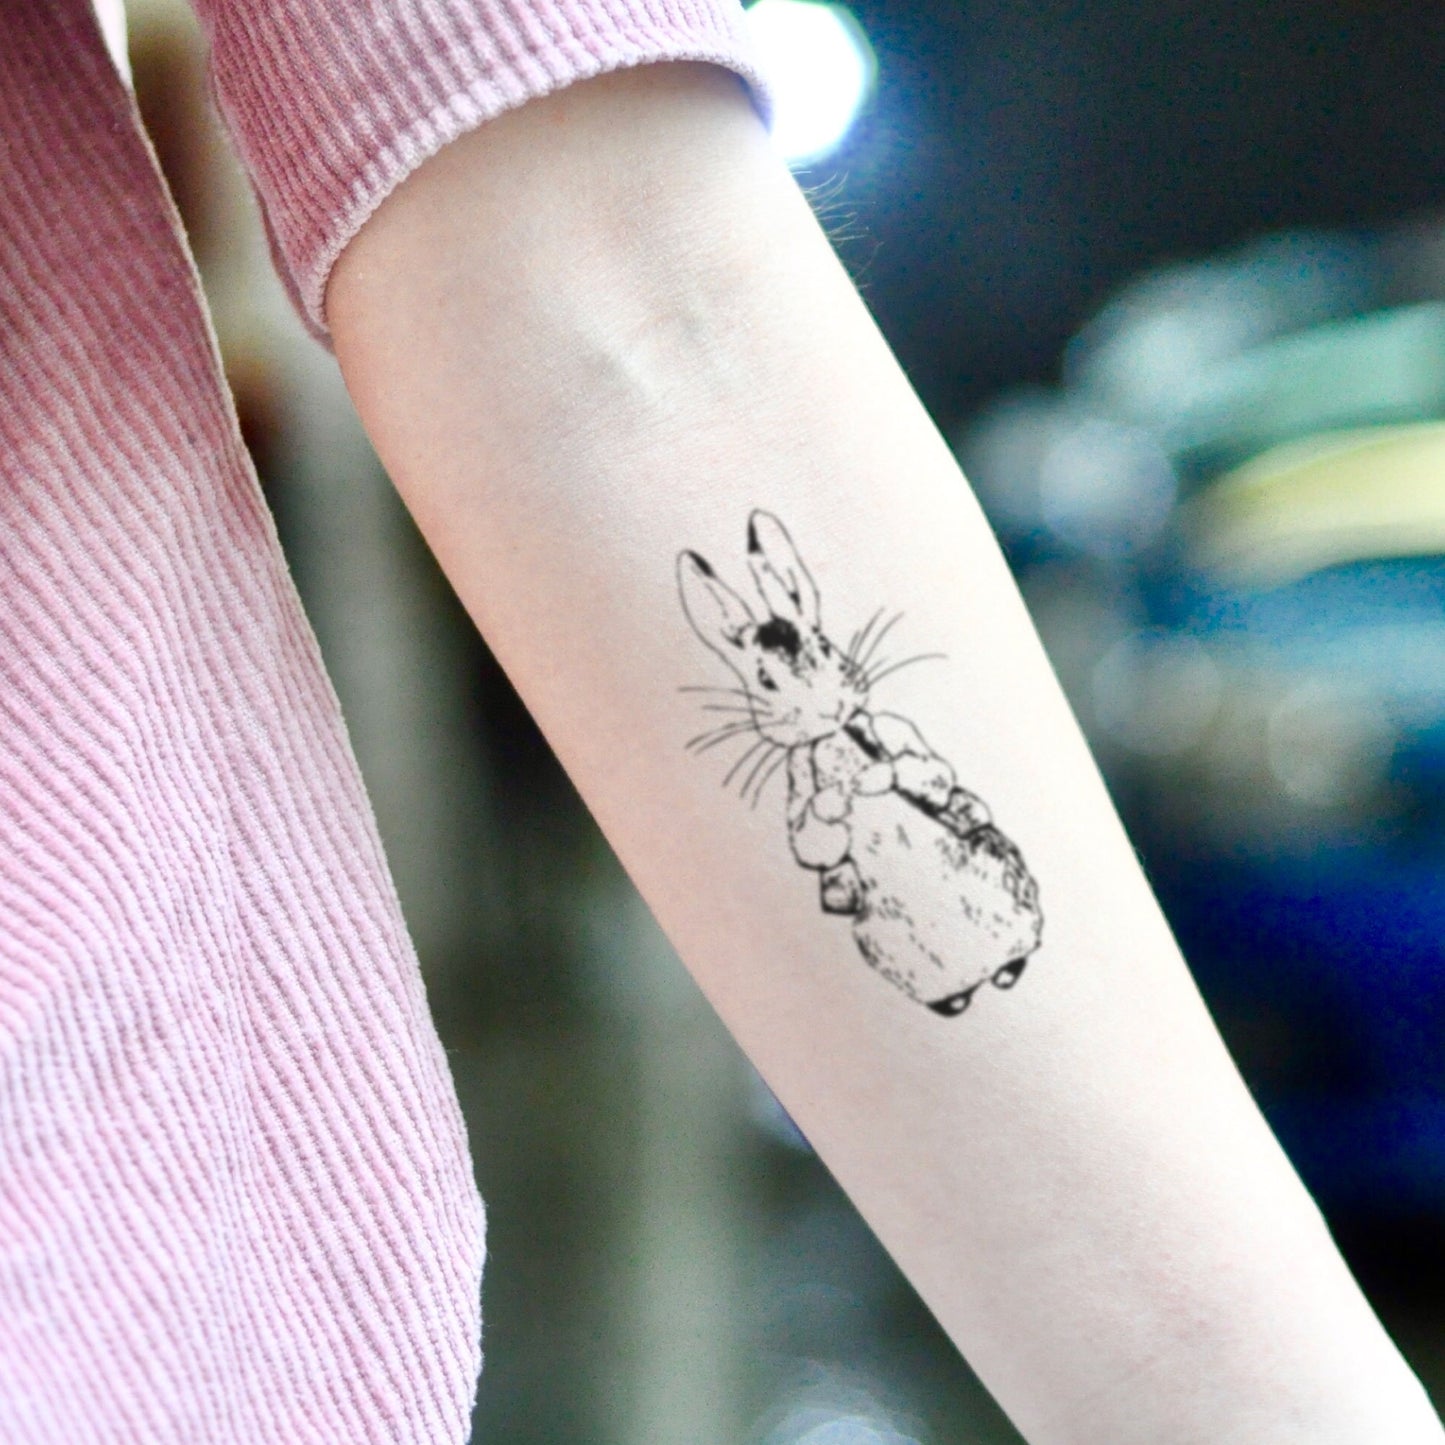 fake small velveteen peter rabbit illustrative temporary tattoo sticker design idea on inner arm